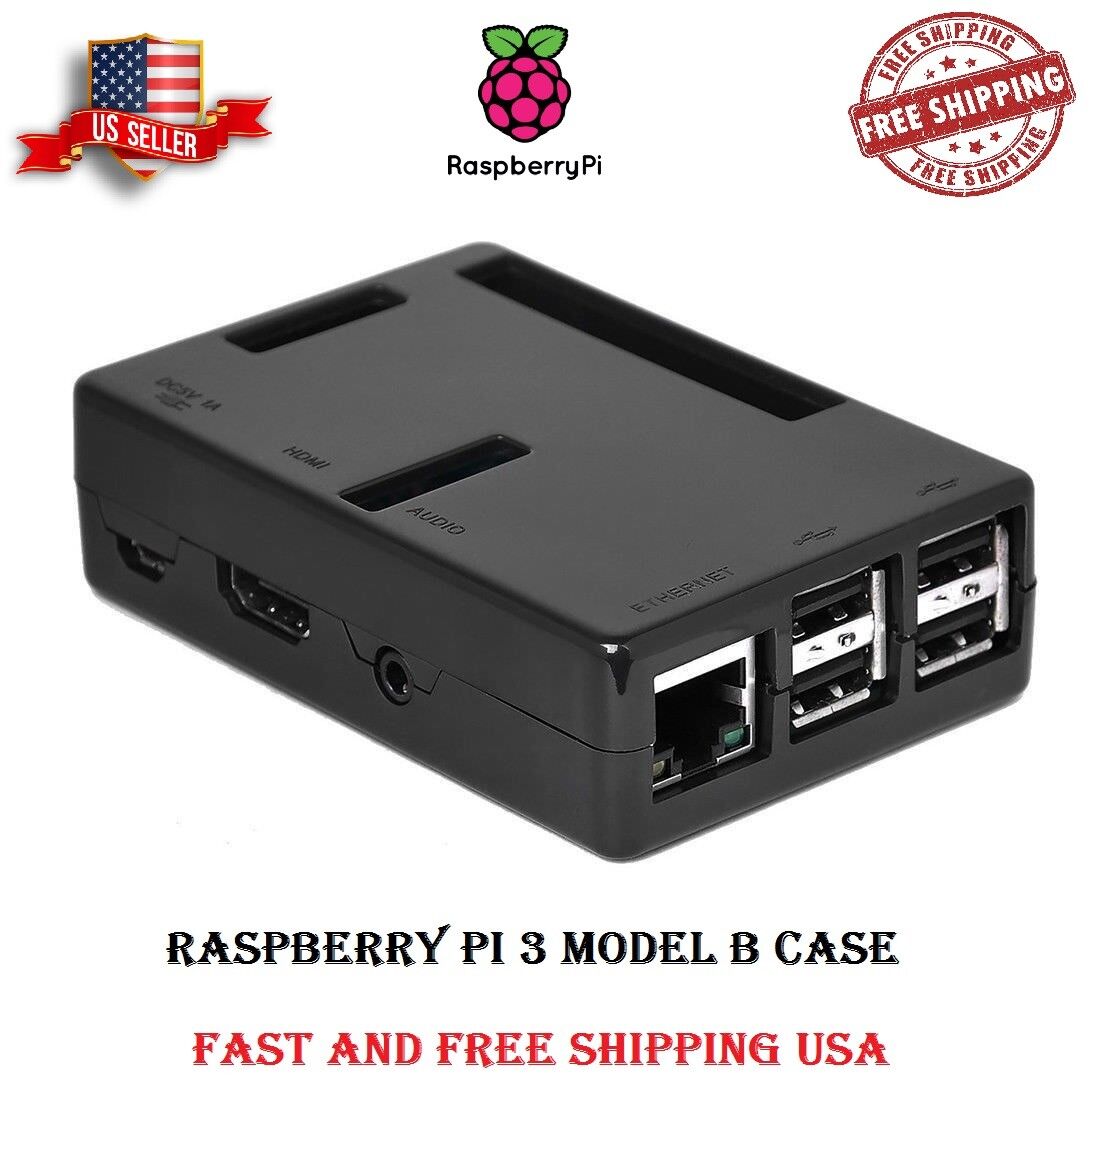 Raspberry Pi 3 Model B case, Protective ***FREE SHIPPING*** USA****